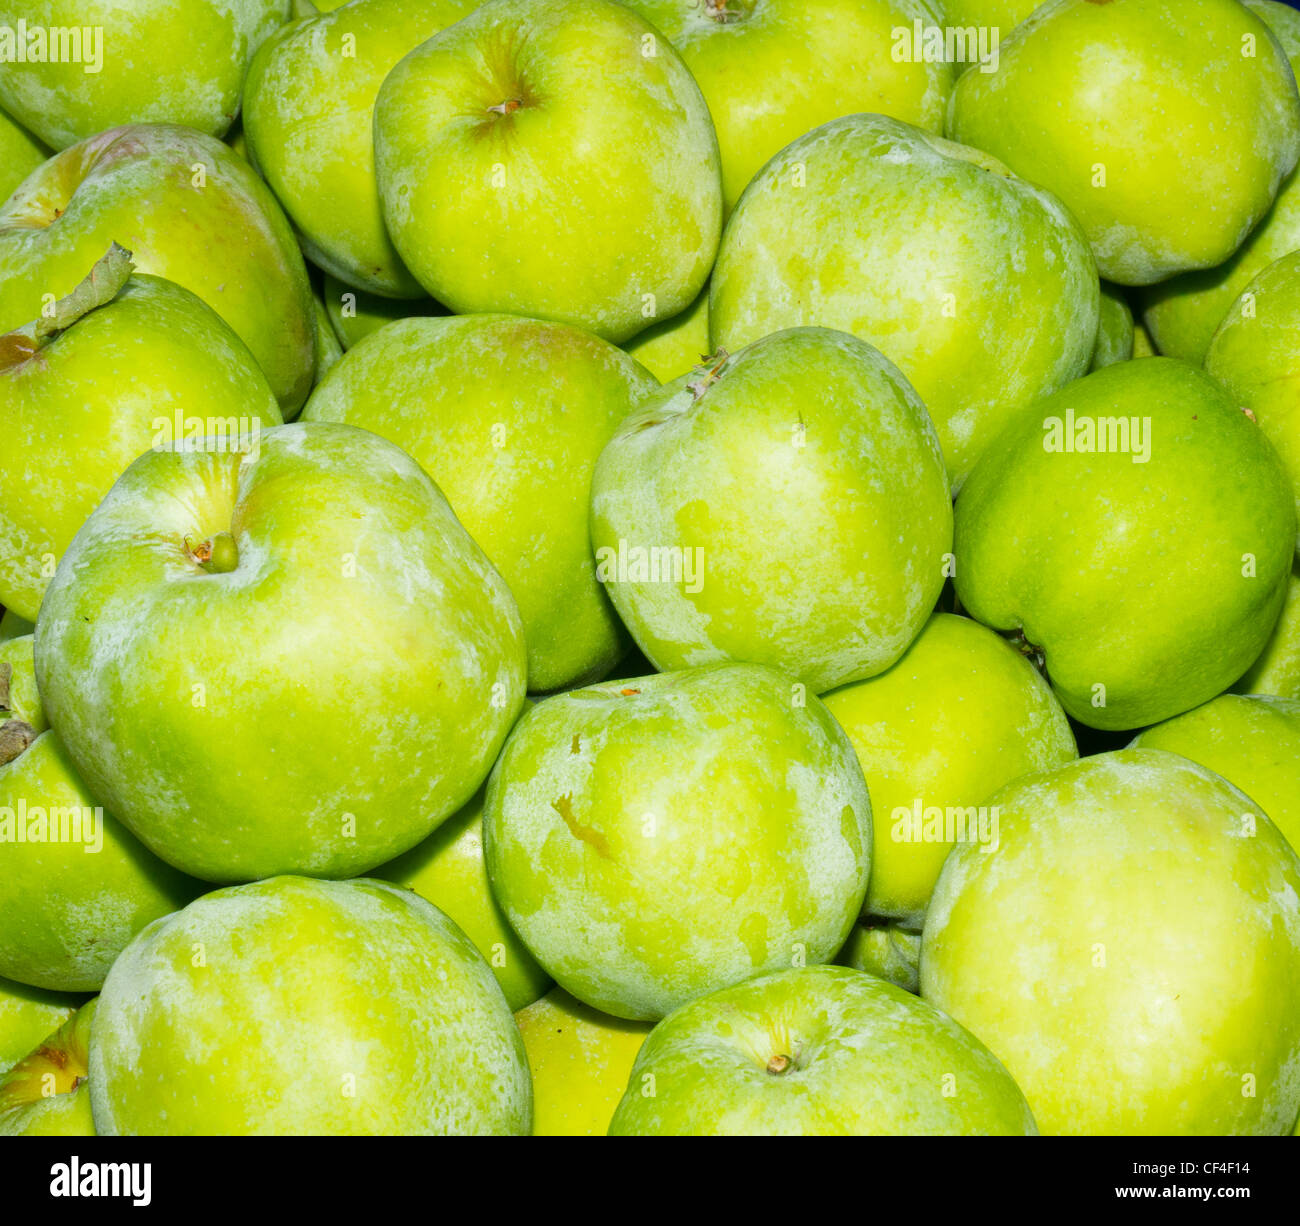 Fresh Gravenstein apples on display at the farmer's market Stock Photo